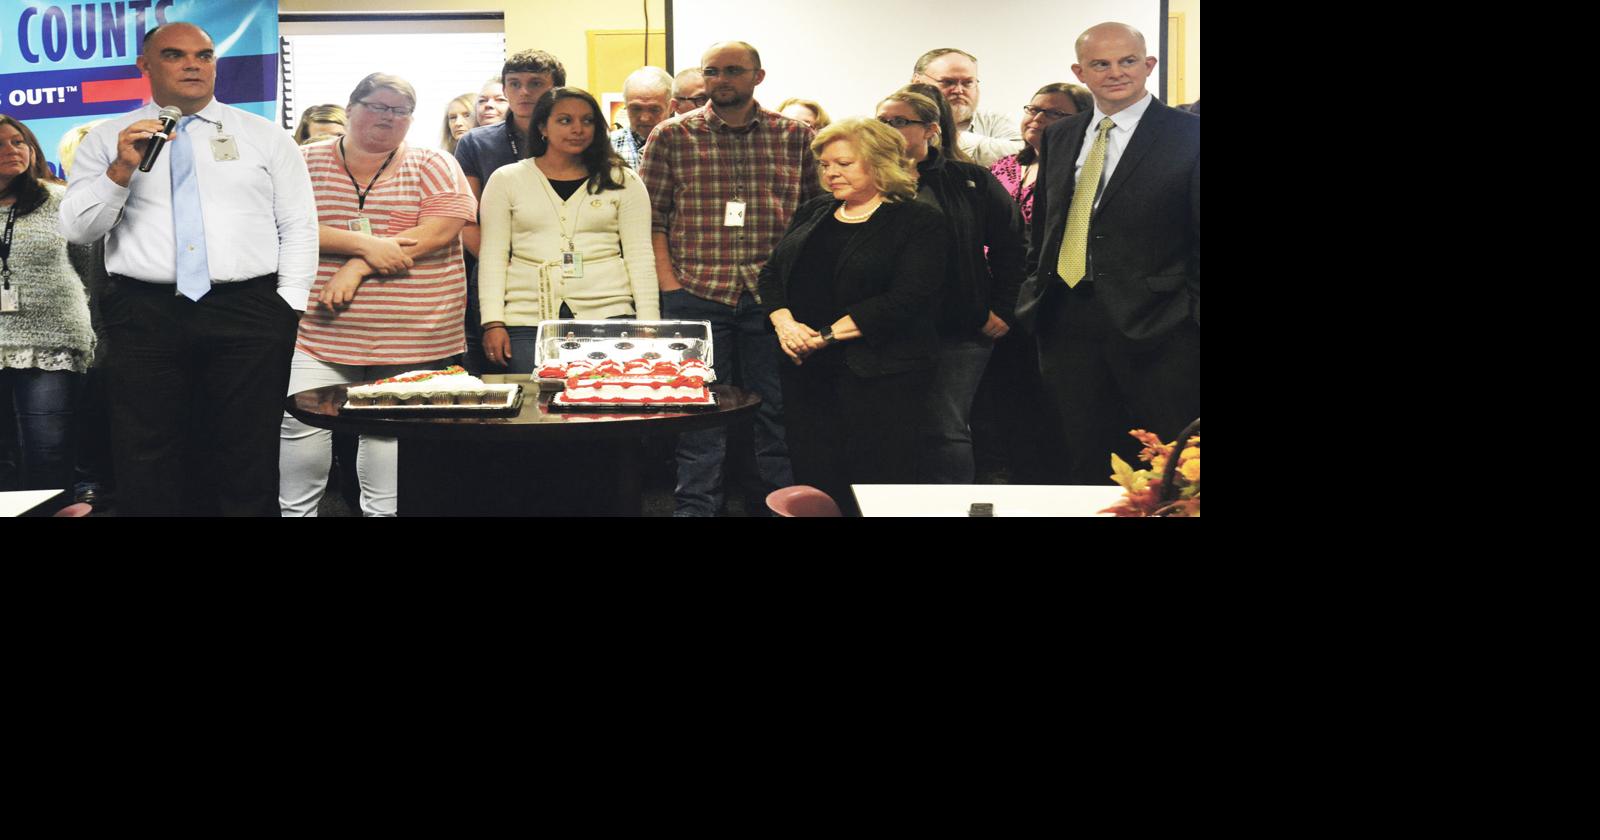 Kentucky Consular Center celebrates 17 years